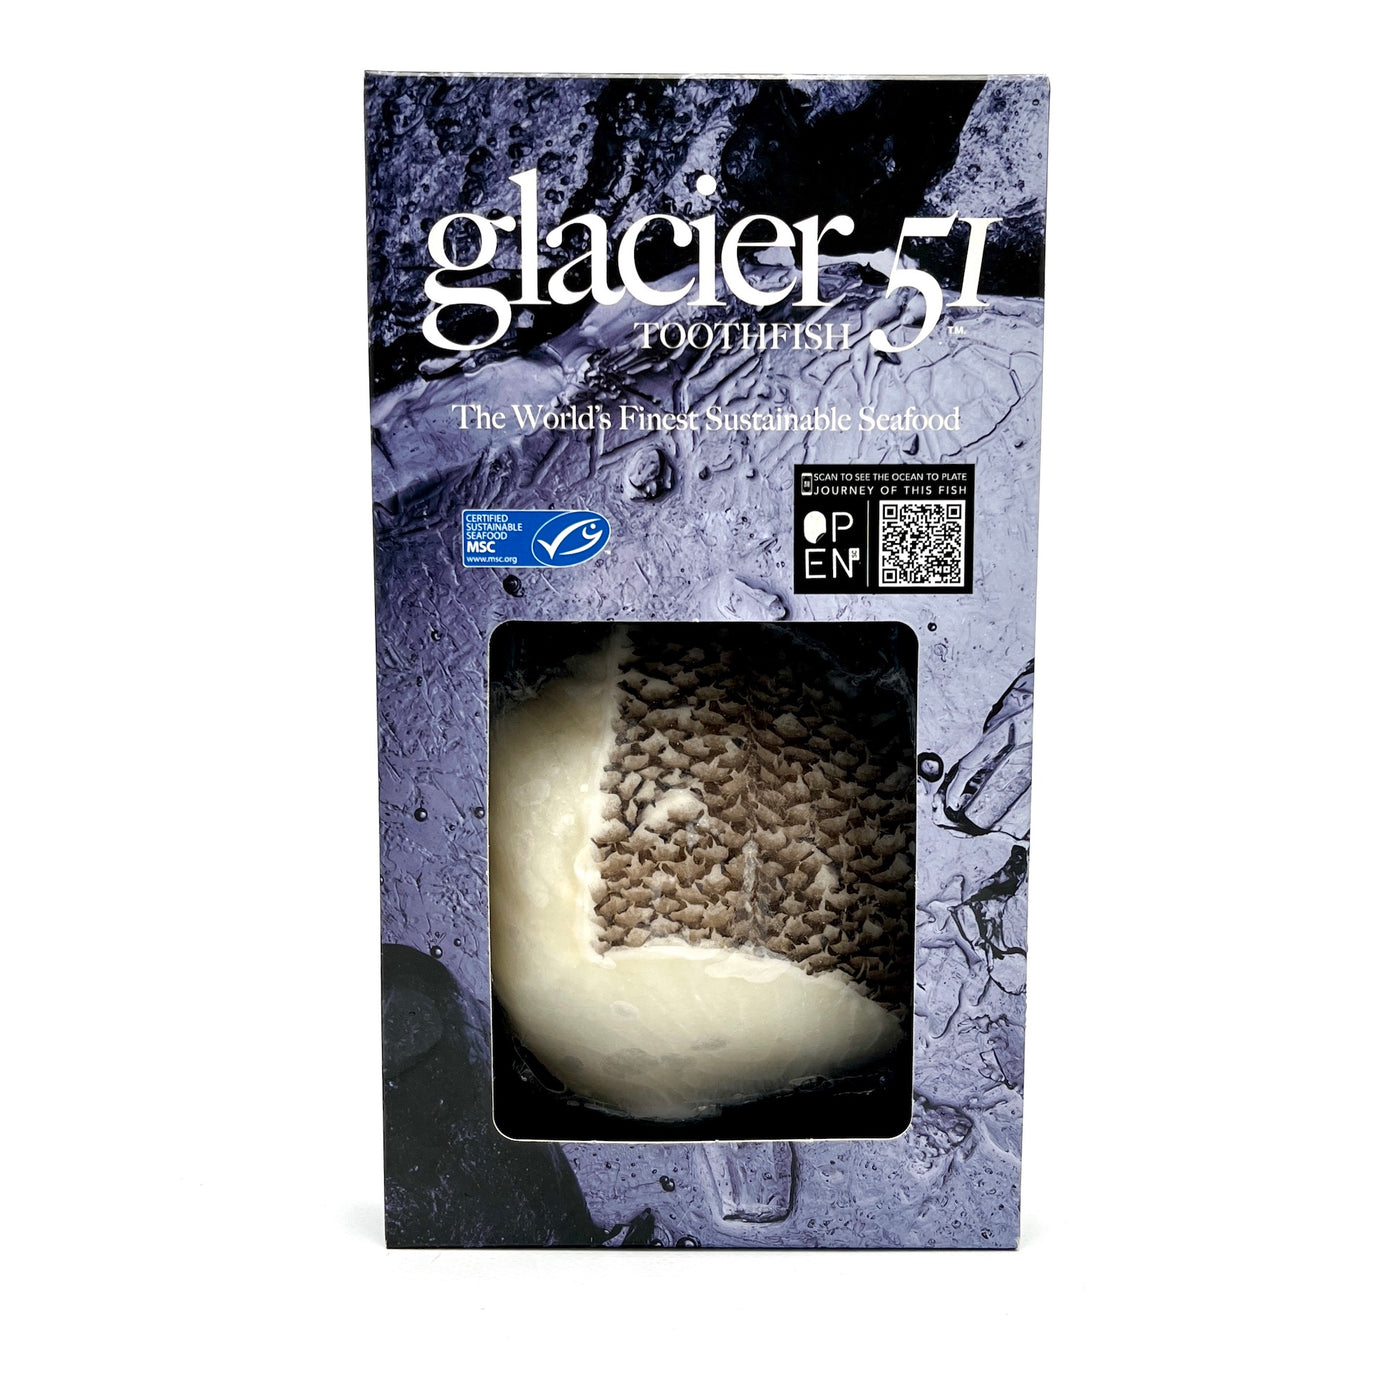 Glacier 51 - Toothfish - Portion 150g